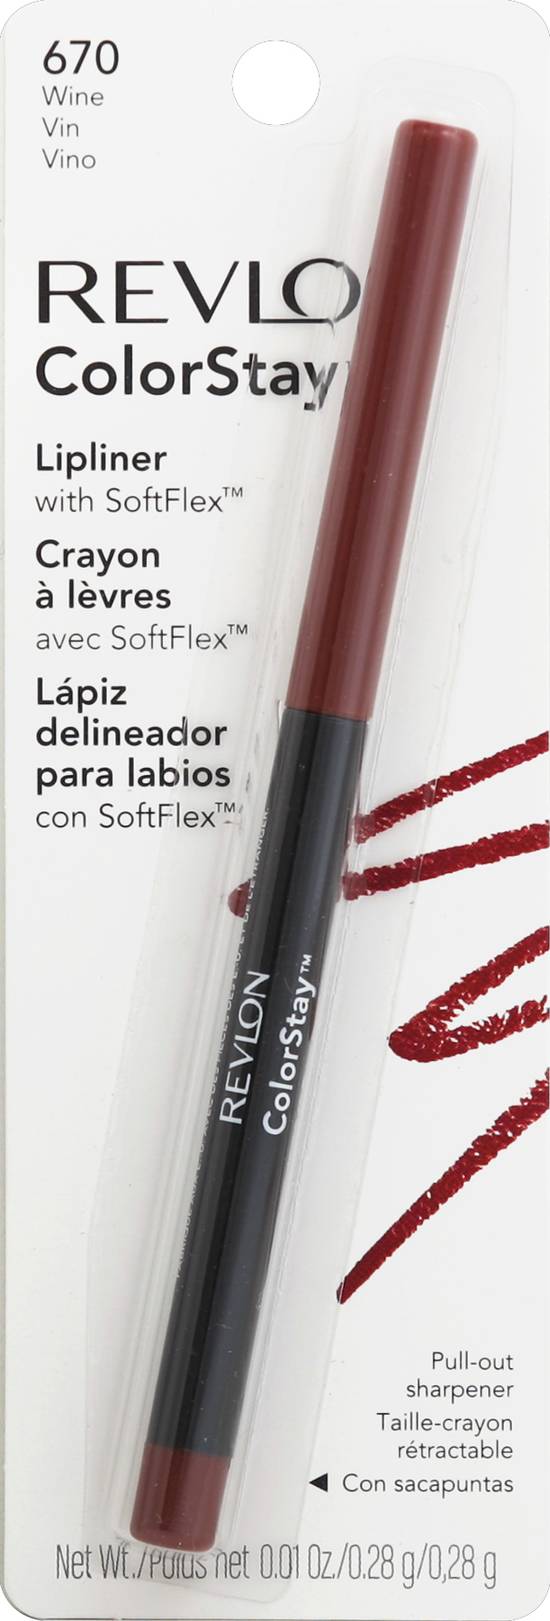 Revlon 670 Wine Colorstay Lip Liner